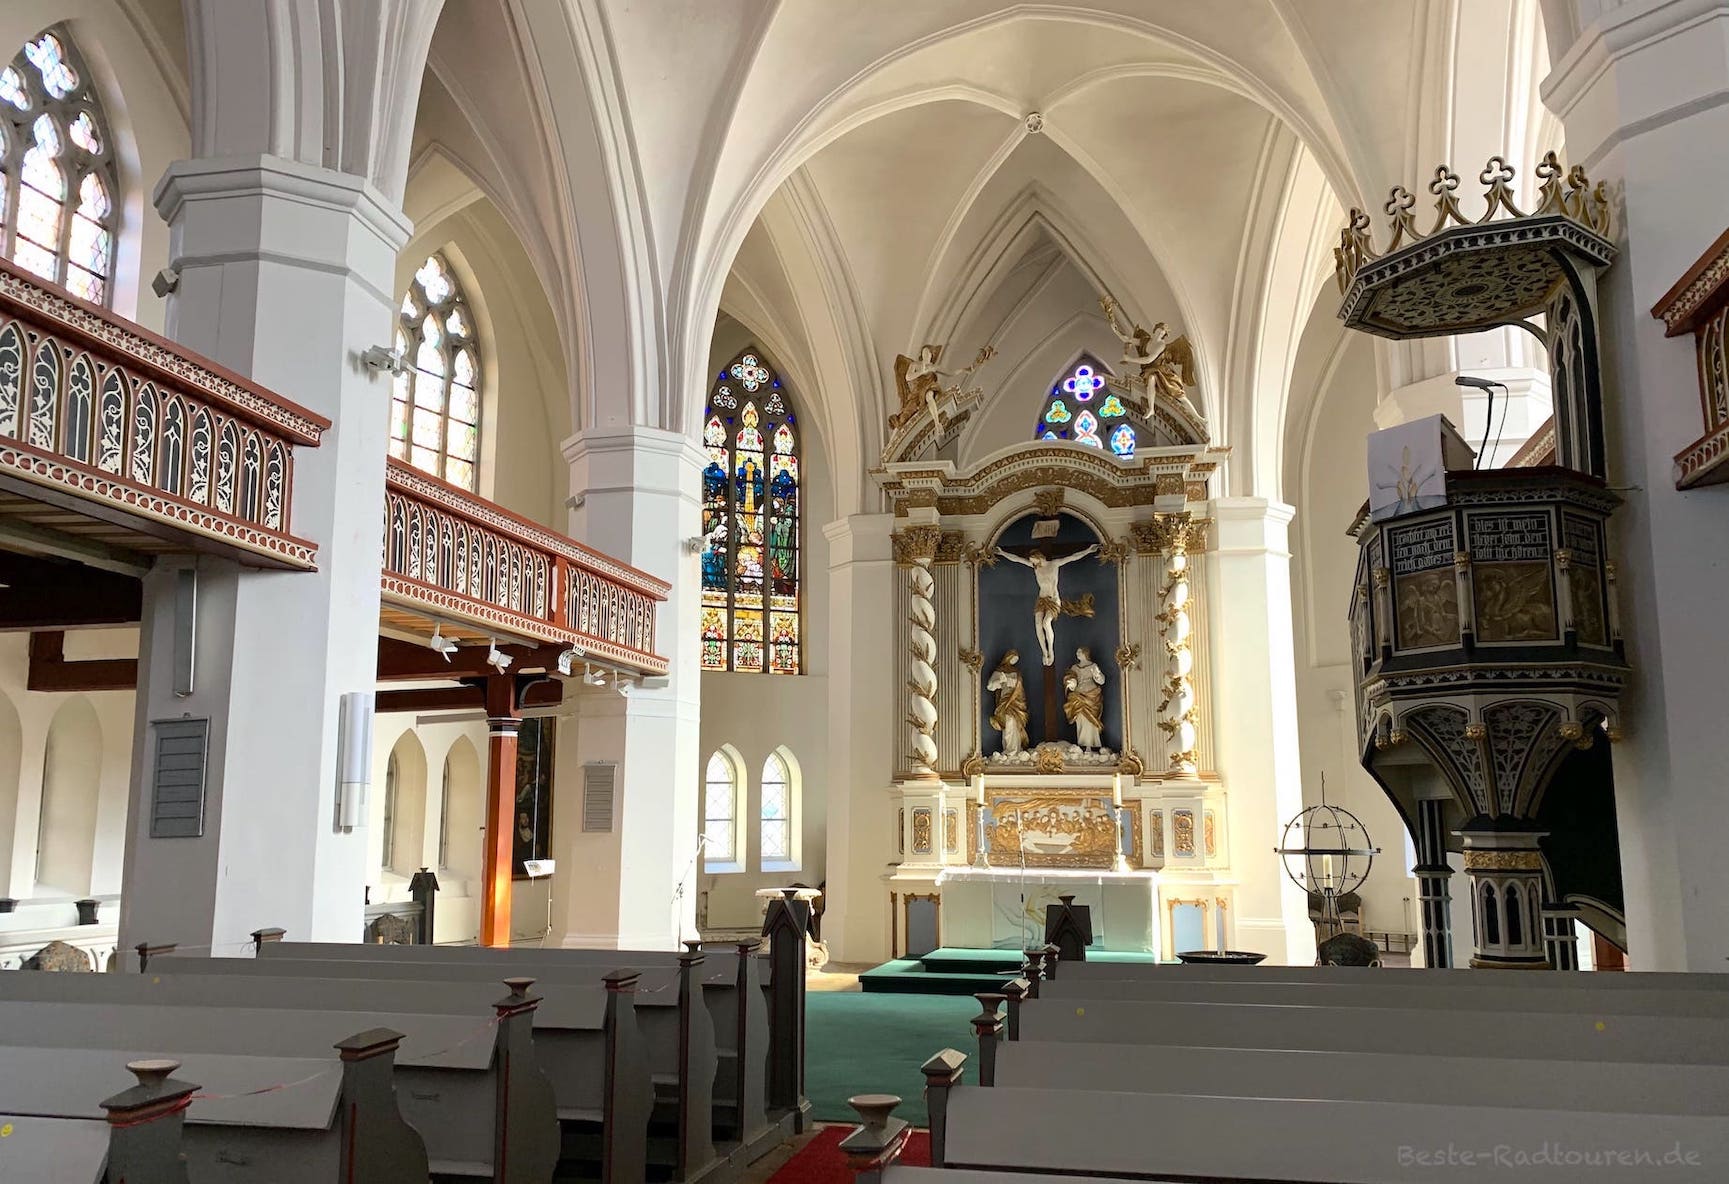 St-Jacobi-Kirche Nauen: Innenraum mit Altar, Kanzel, Empore, Sitzbänken